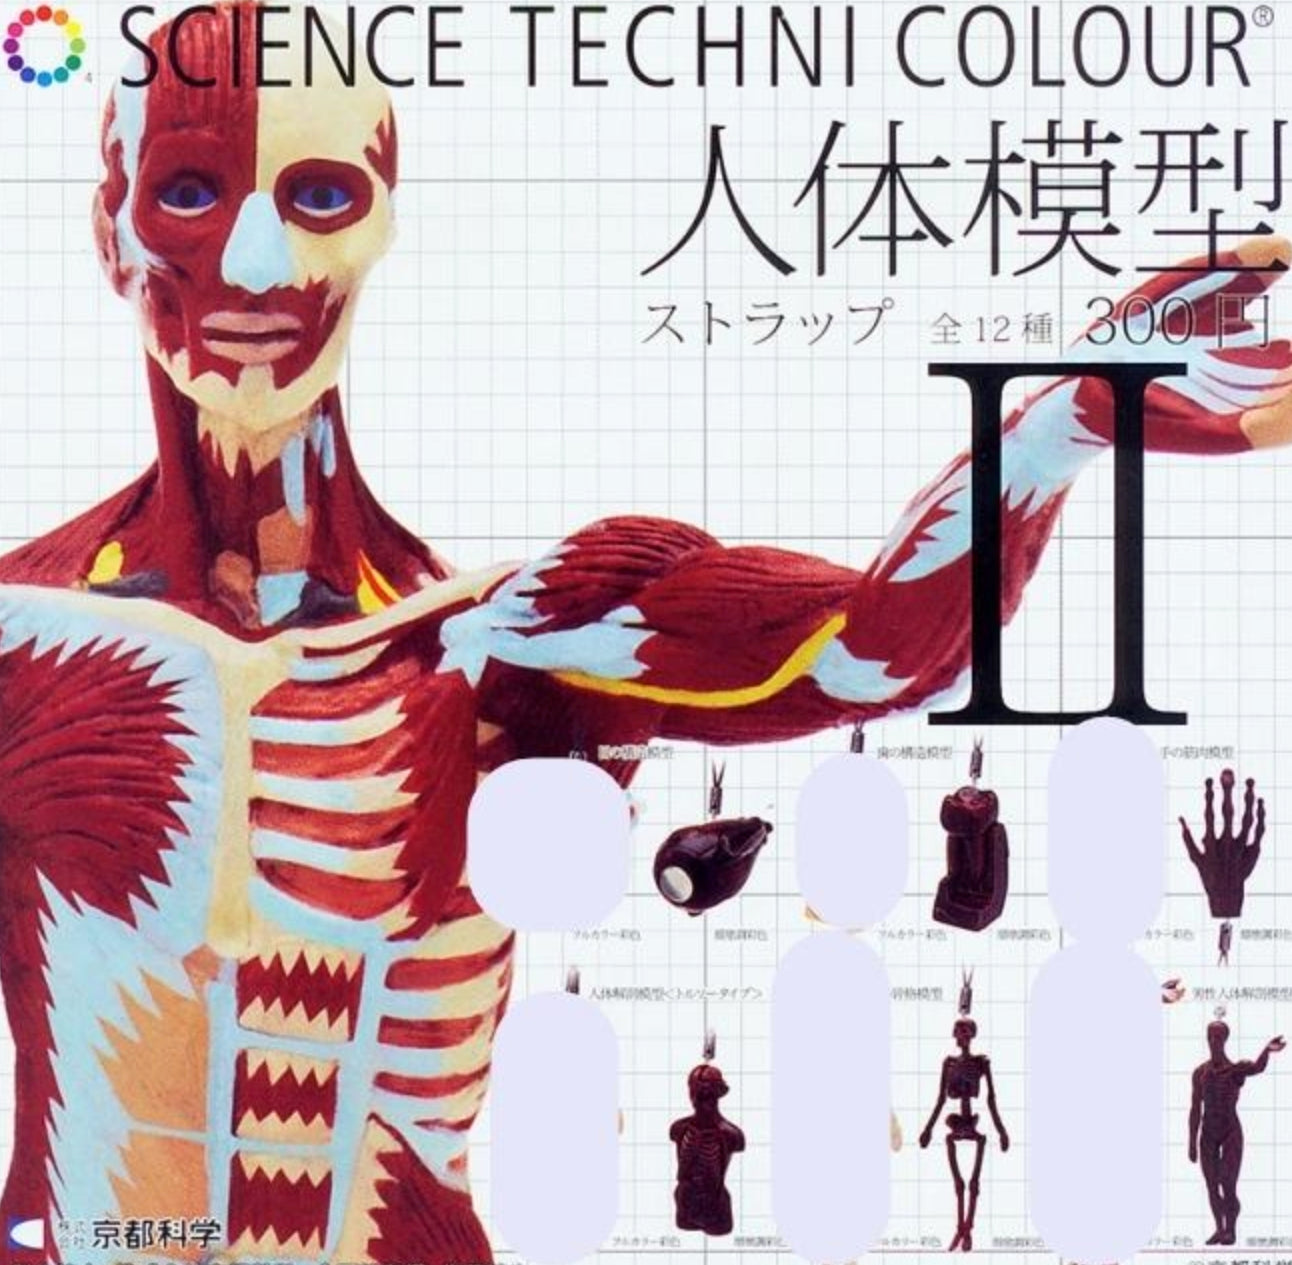 Kitan Club Science Techni Colour Human Anatomy Model Gashapon Part 2 6 Red ver Swing Strap Figure Set